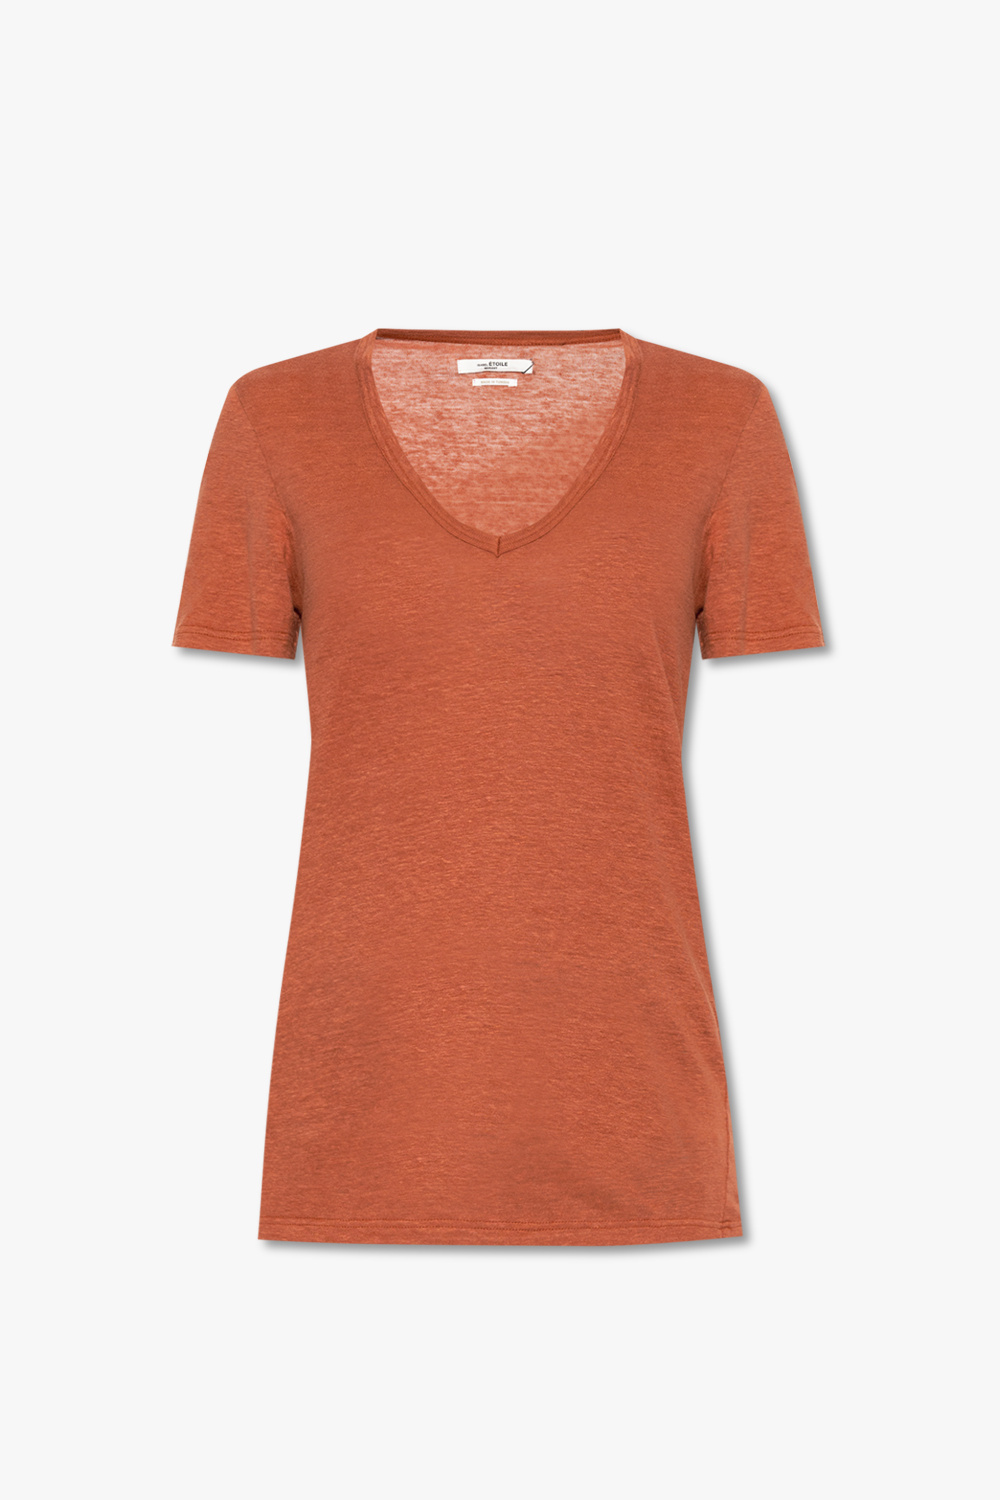 Isabel Marant Étoile ‘Kranger’ T-shirt